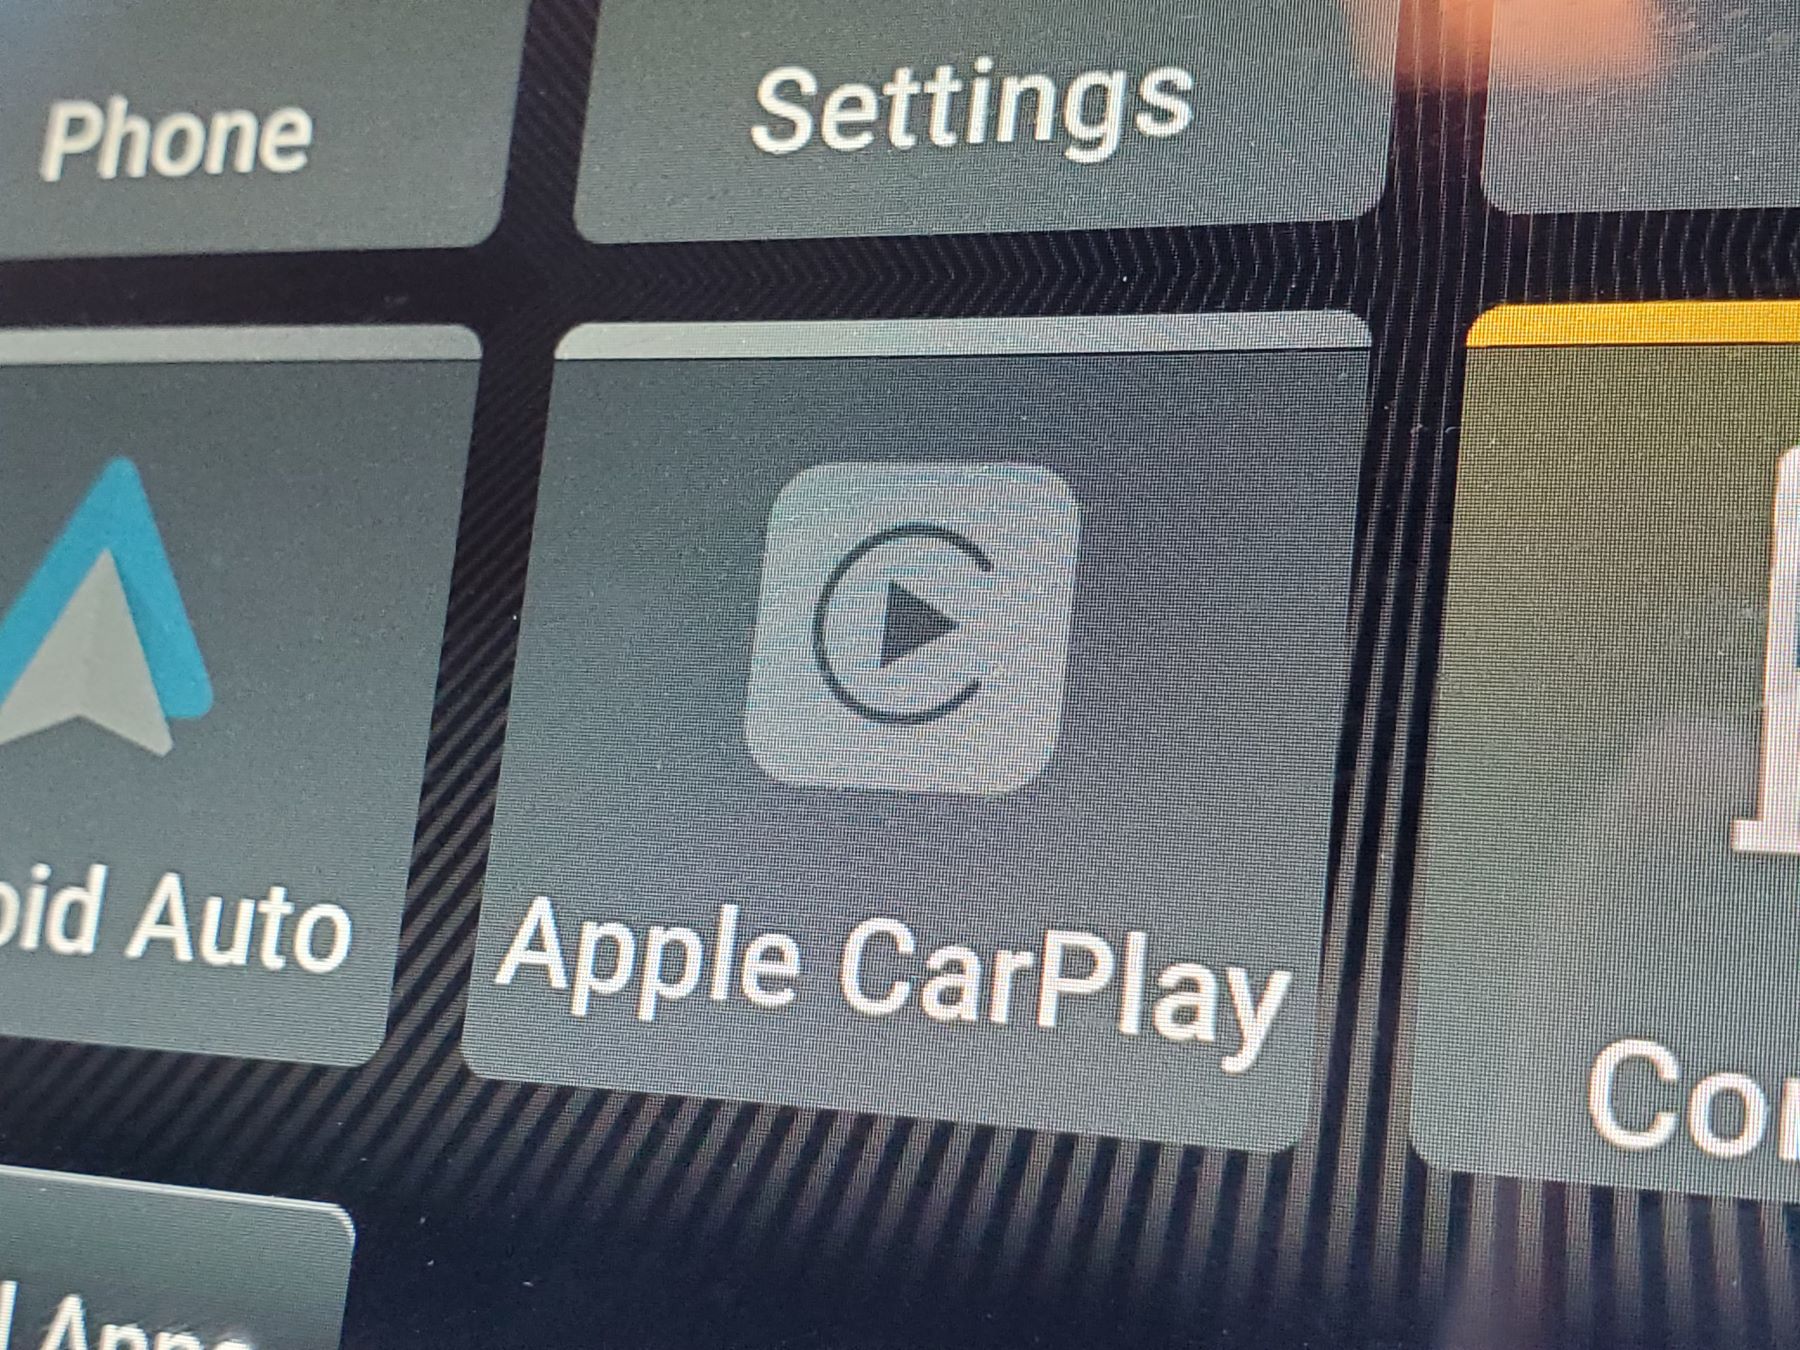 The Apple CarPlay icon on a vehicle dashboard display